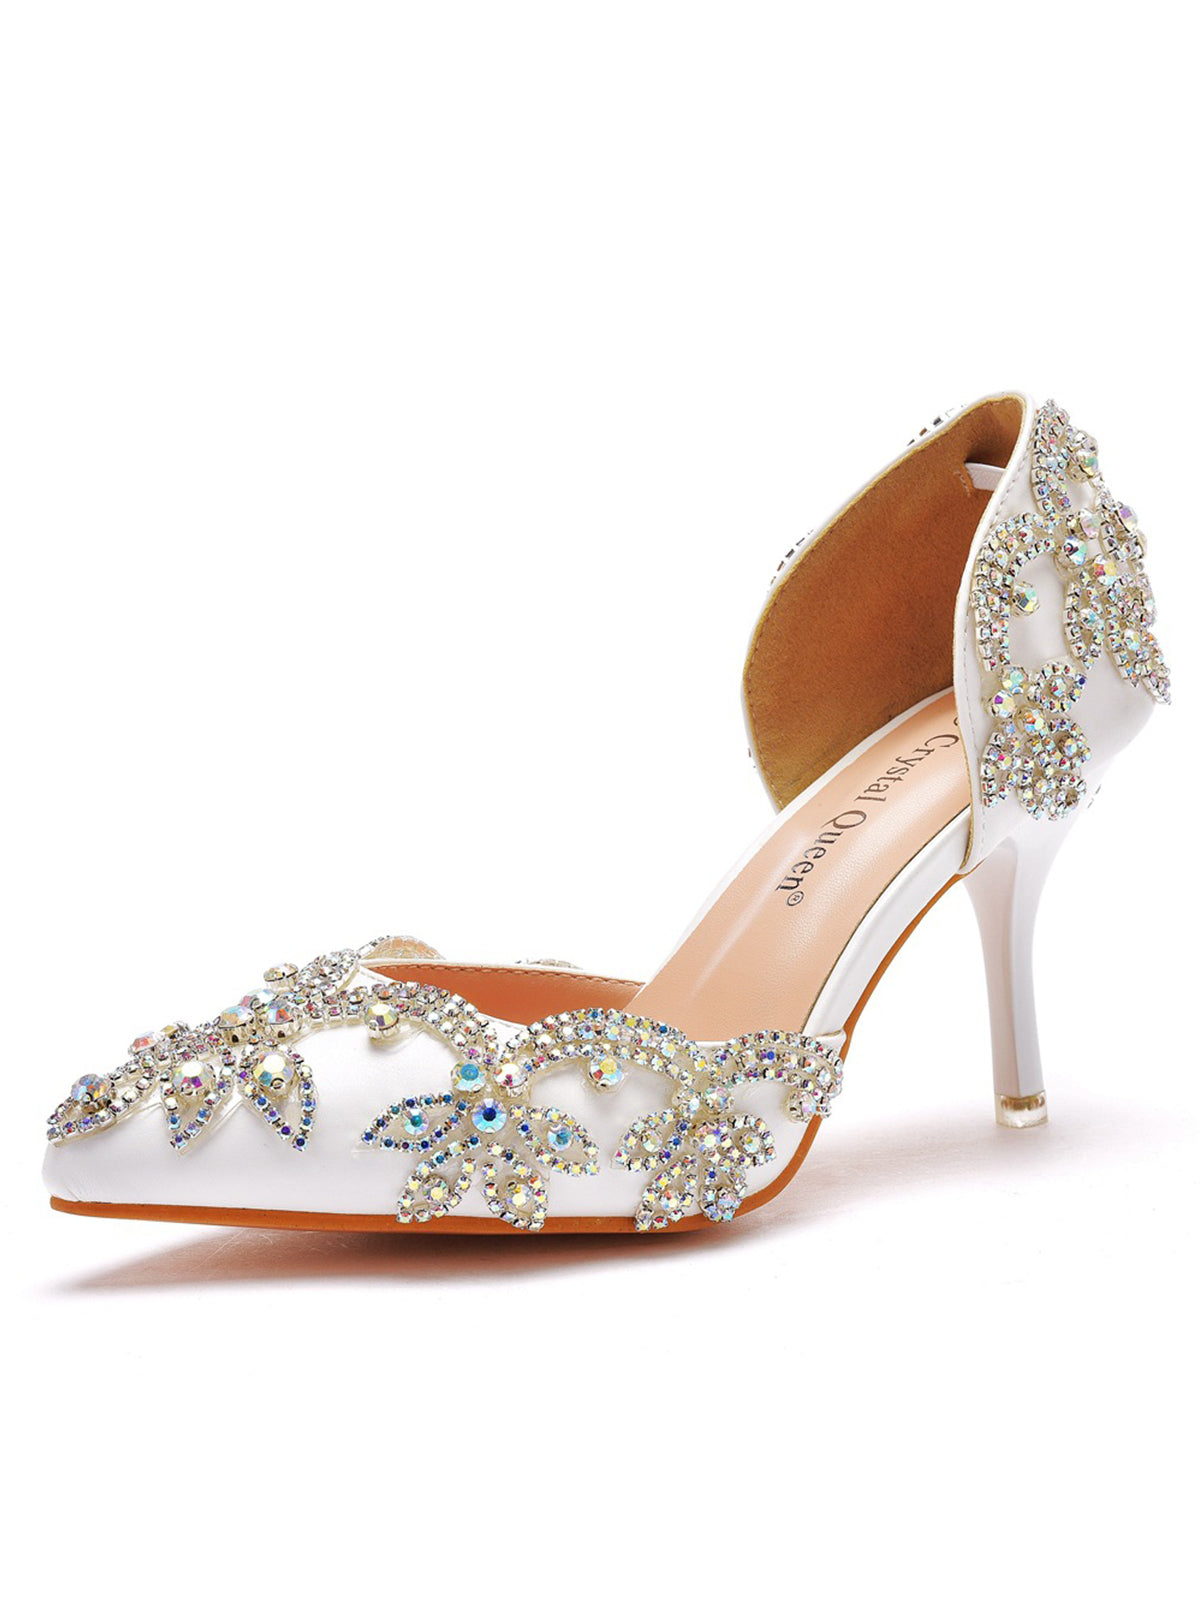 Woman's Wedding Shoes Pointed Toe rhinestone Stiletto